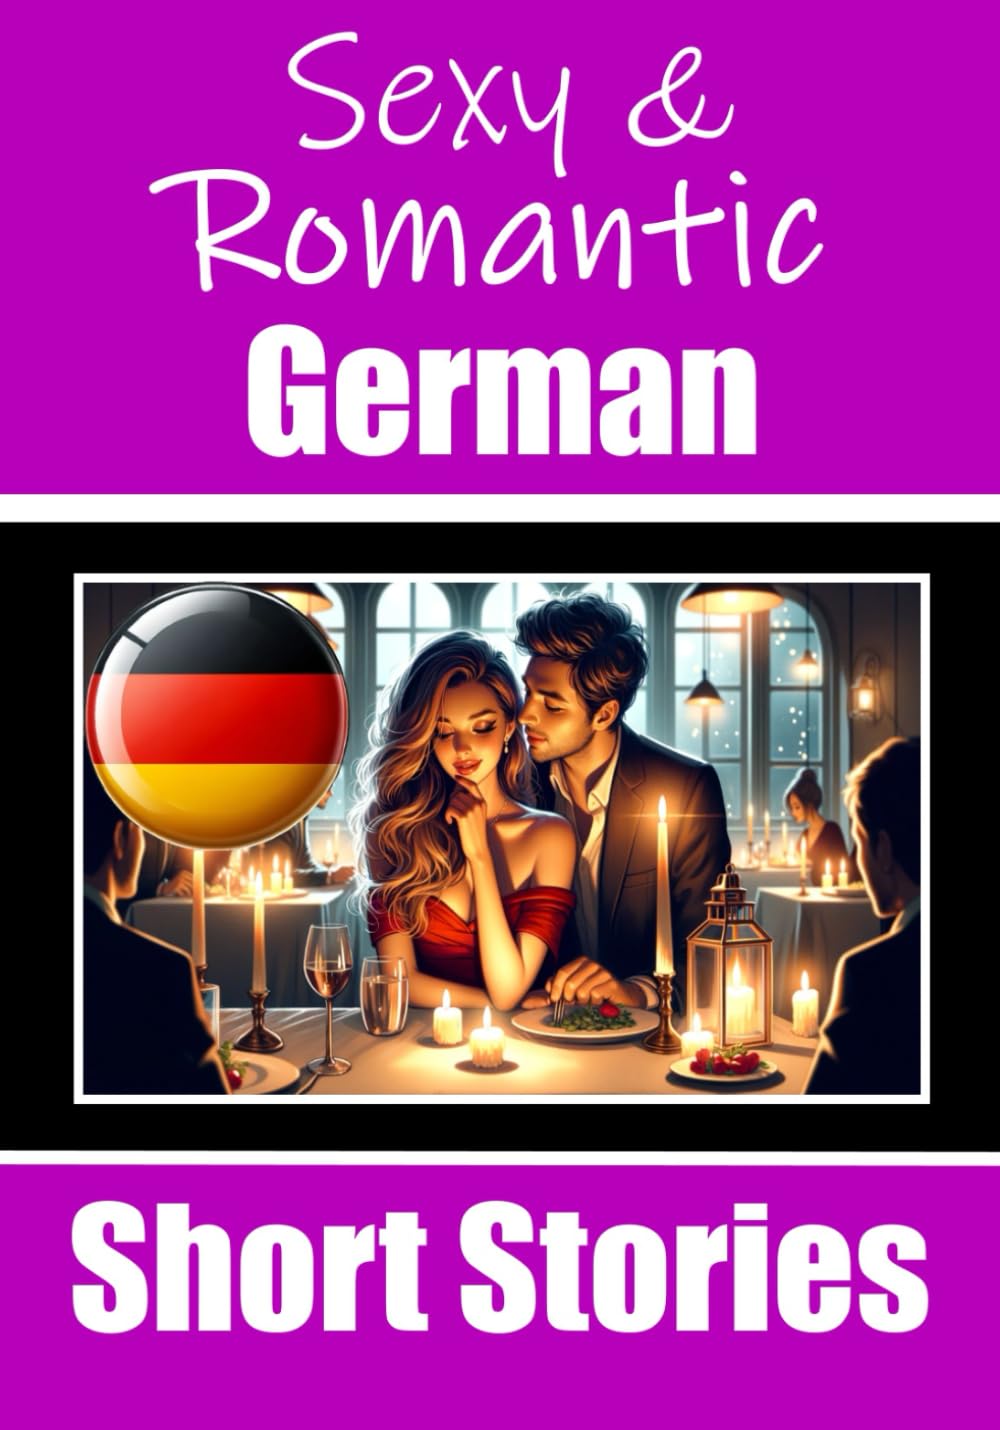 50 Sexy & Romantic Short Stories in German